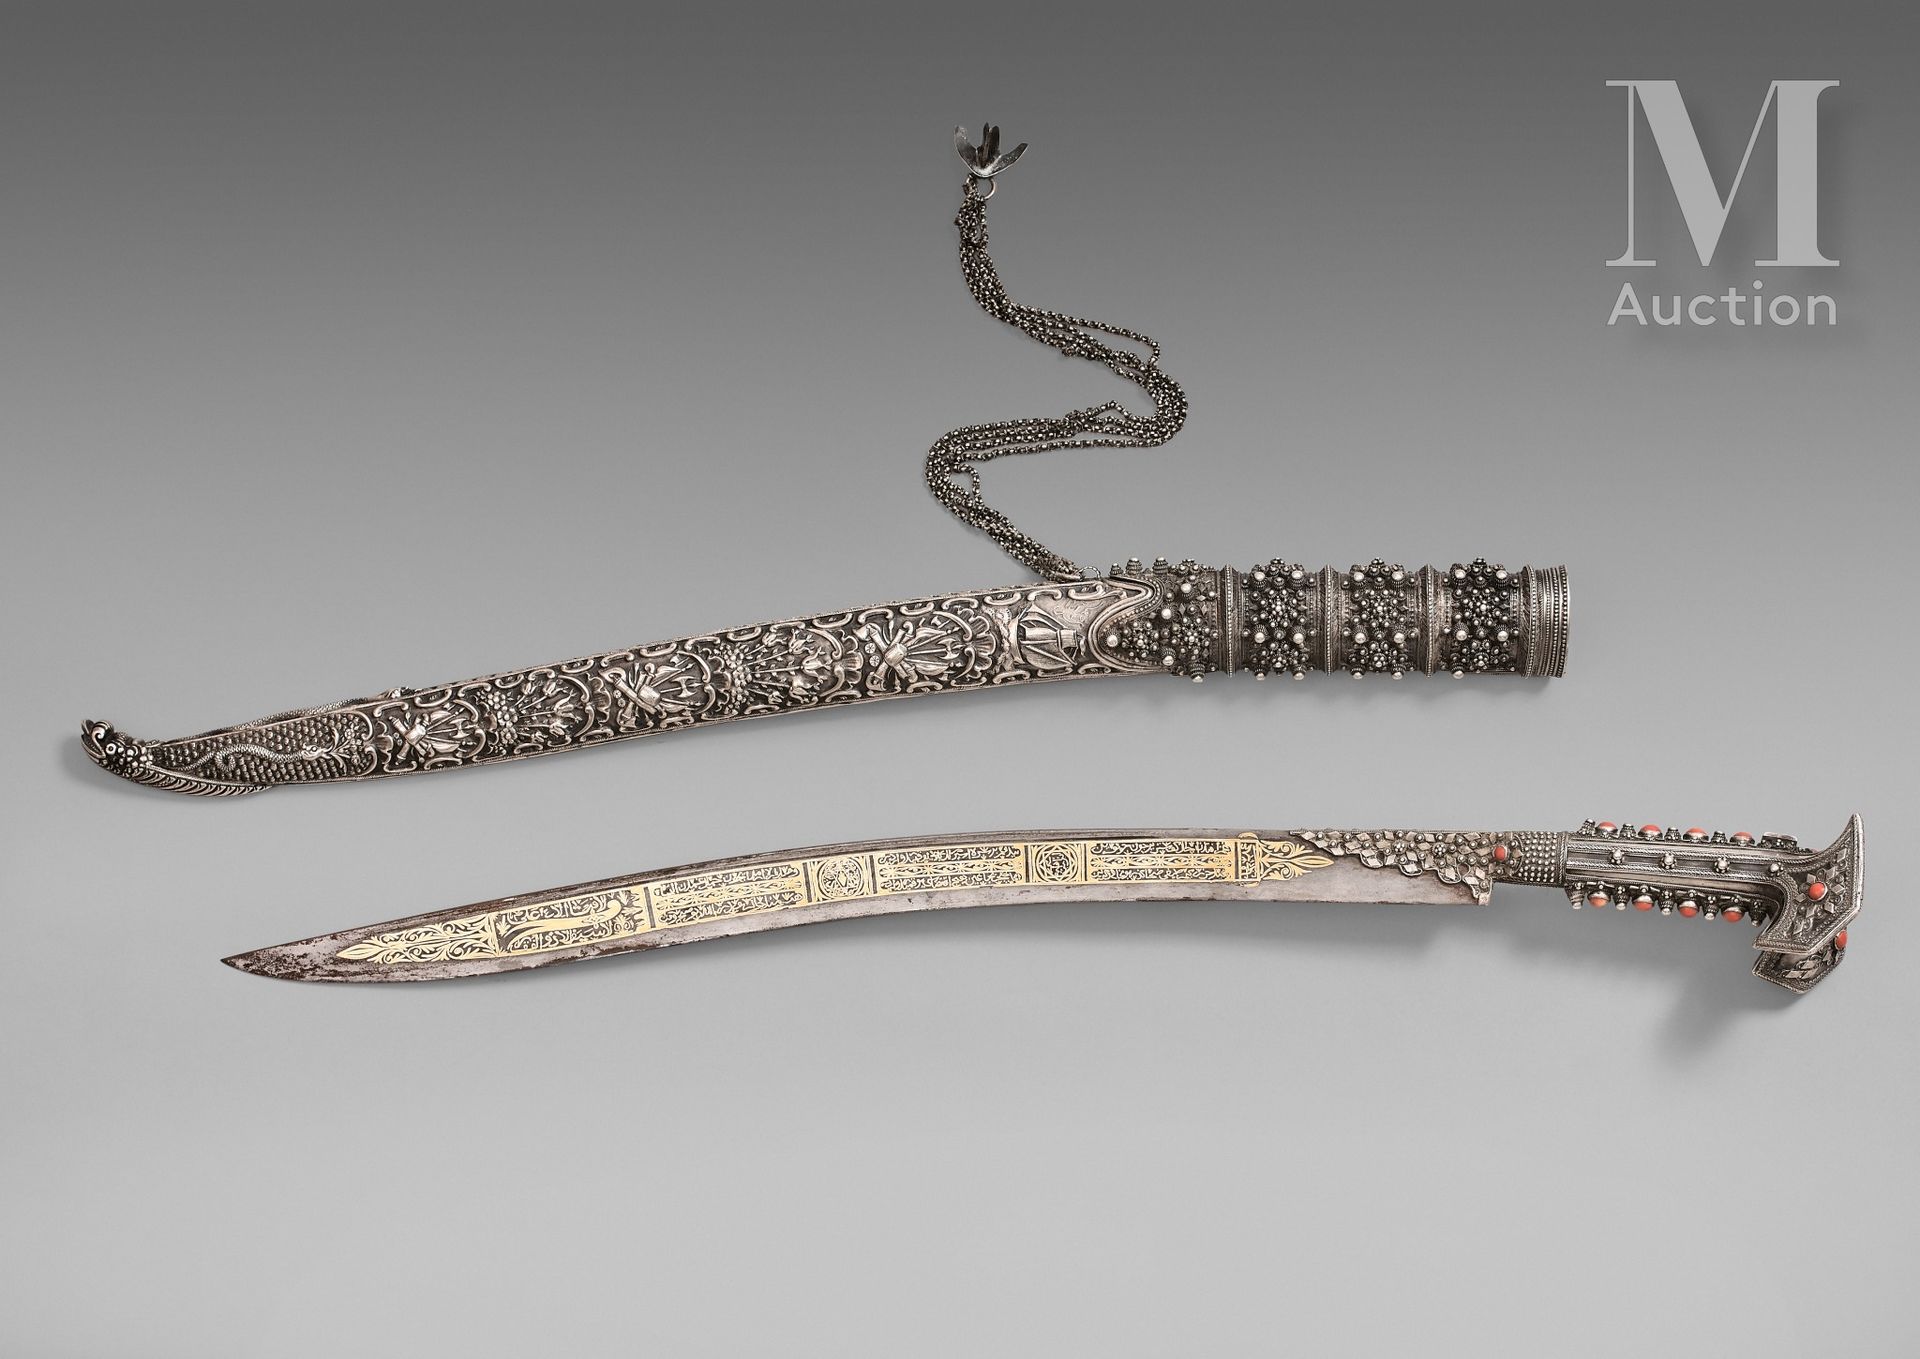 Superbe Yatagan ottoman Turchia, circa 1870-1880

Una spada corta con una lama i&hellip;